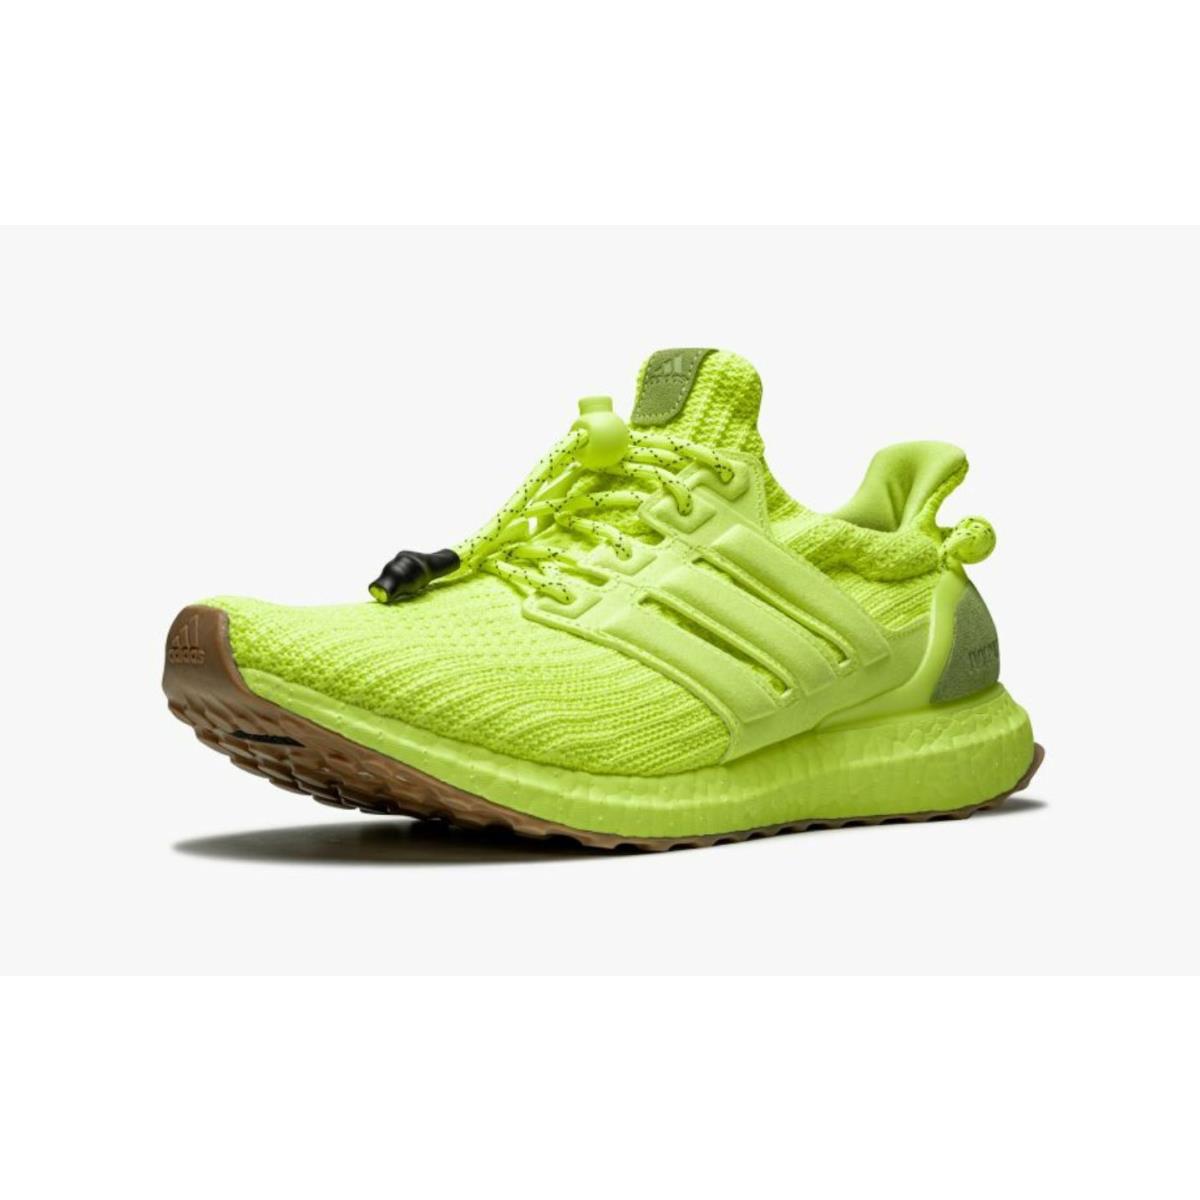 Adidas shoes UltraBoost - Yellow 1